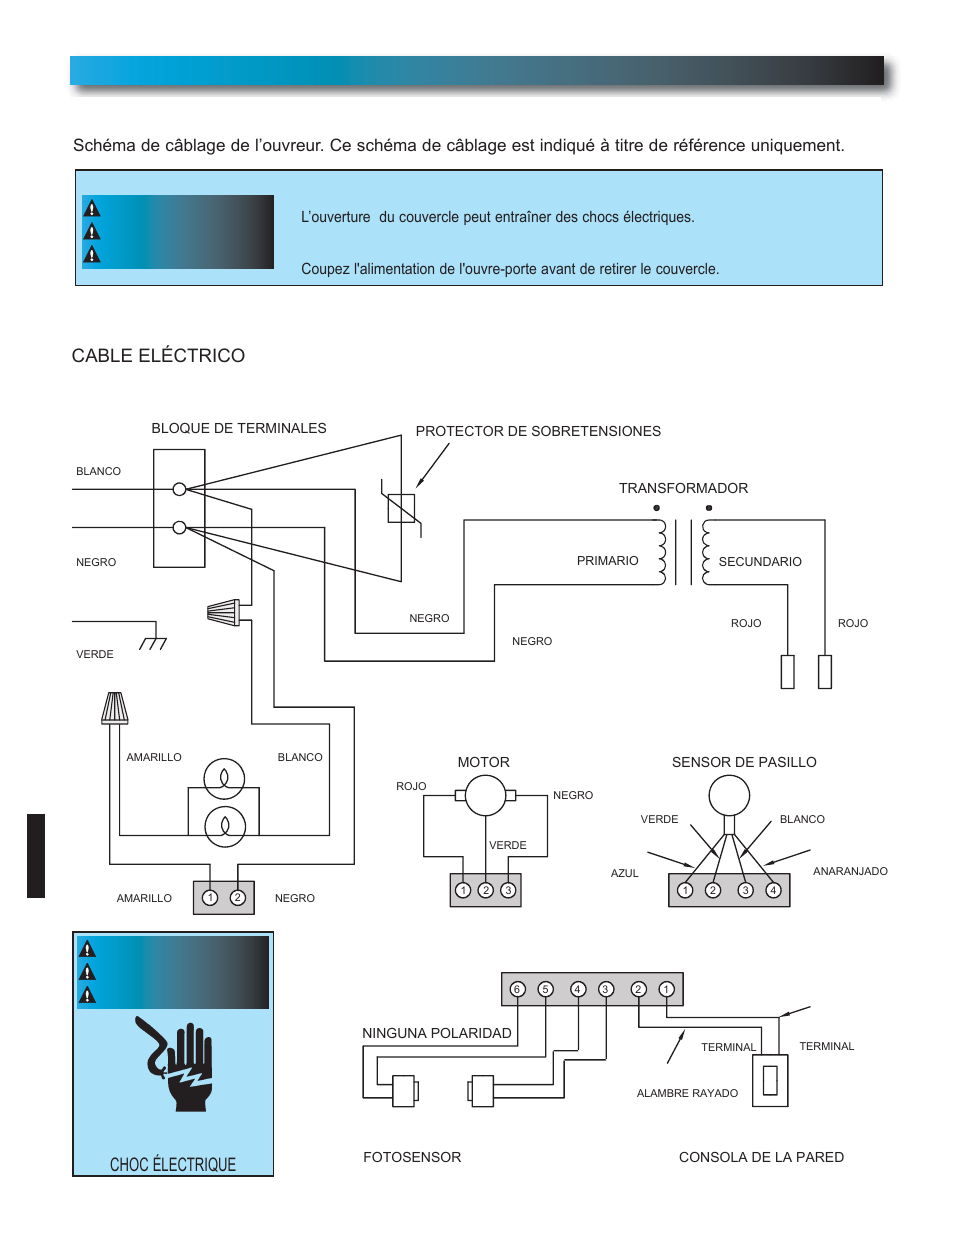 Power cord, Circuit wiring diagram, Cordon de secteur cable eléctrico